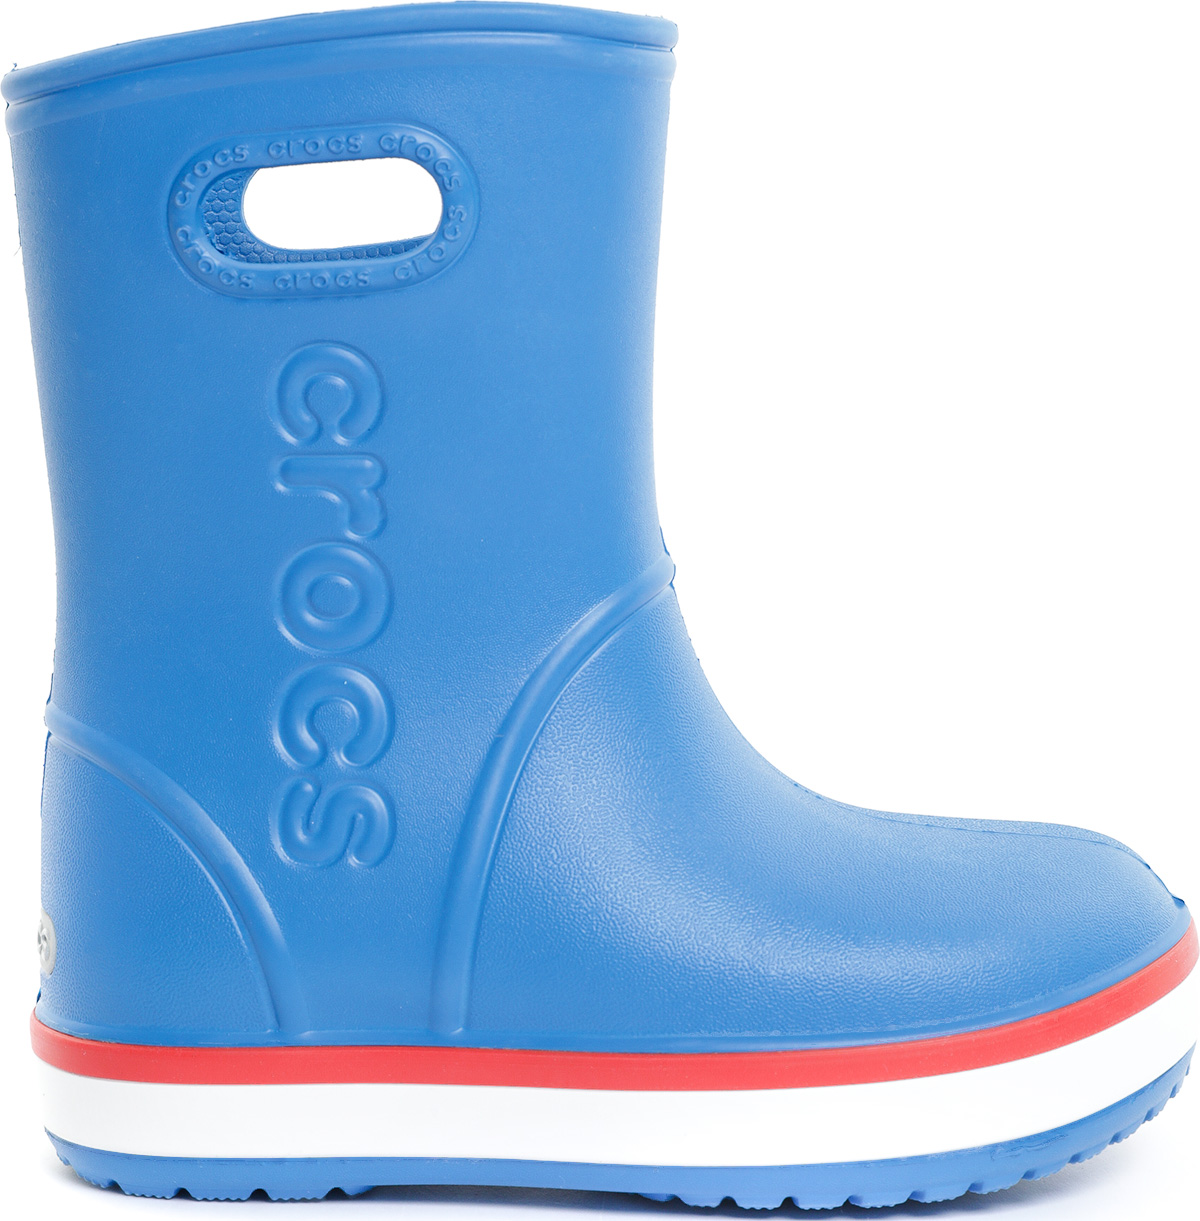 фото Сапоги резиновые crocs crocband rain boot цв. синий р. 30